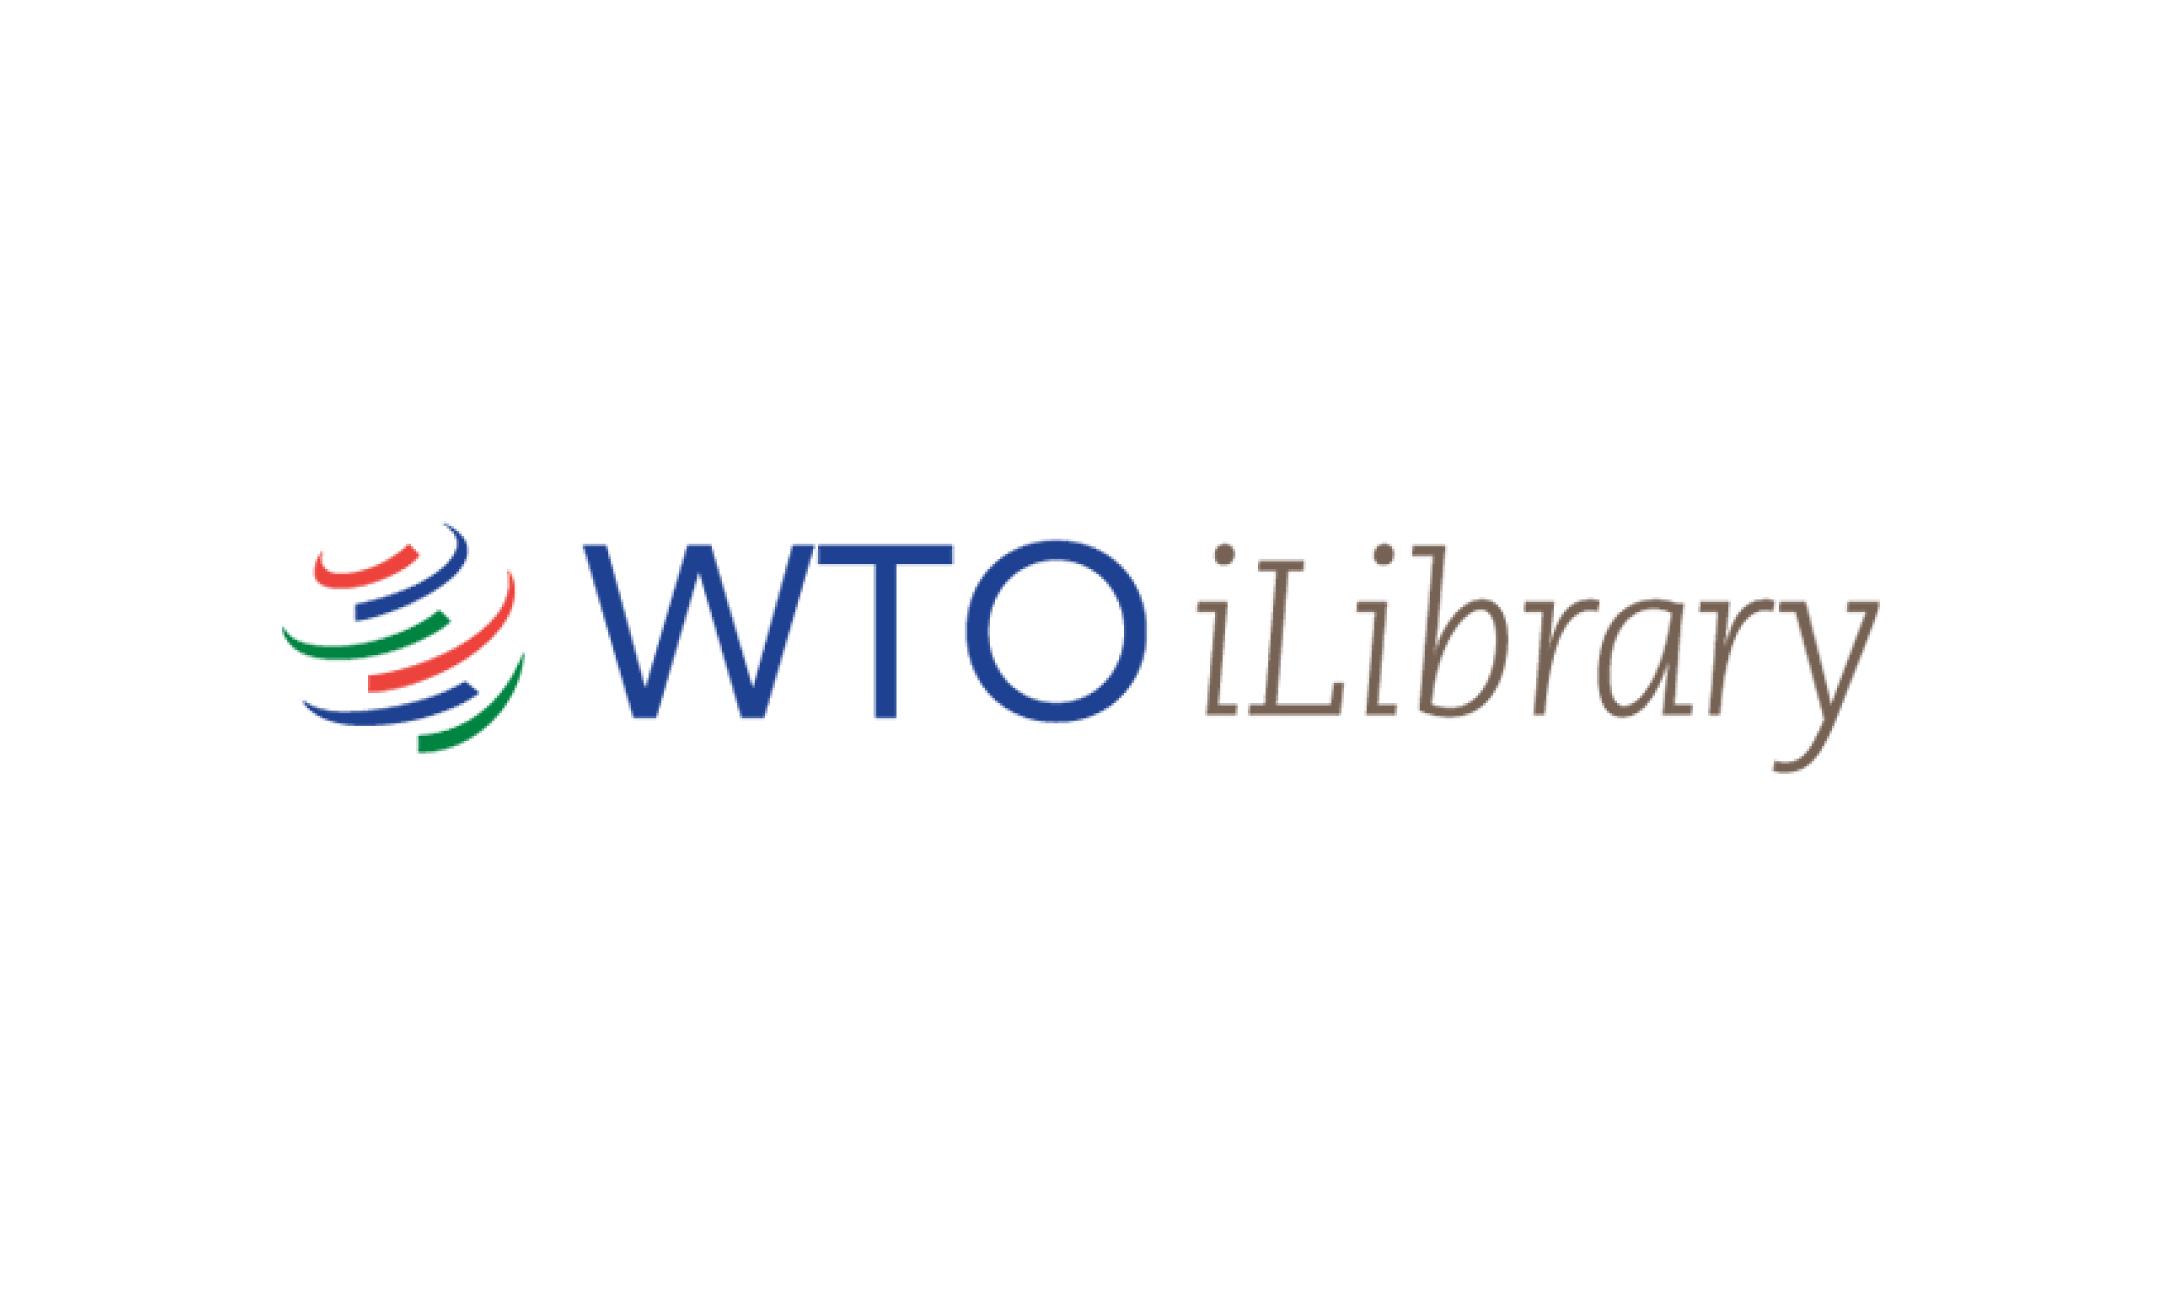 Новый ресурс в подписке библиотеки — WTO ILIBRARY